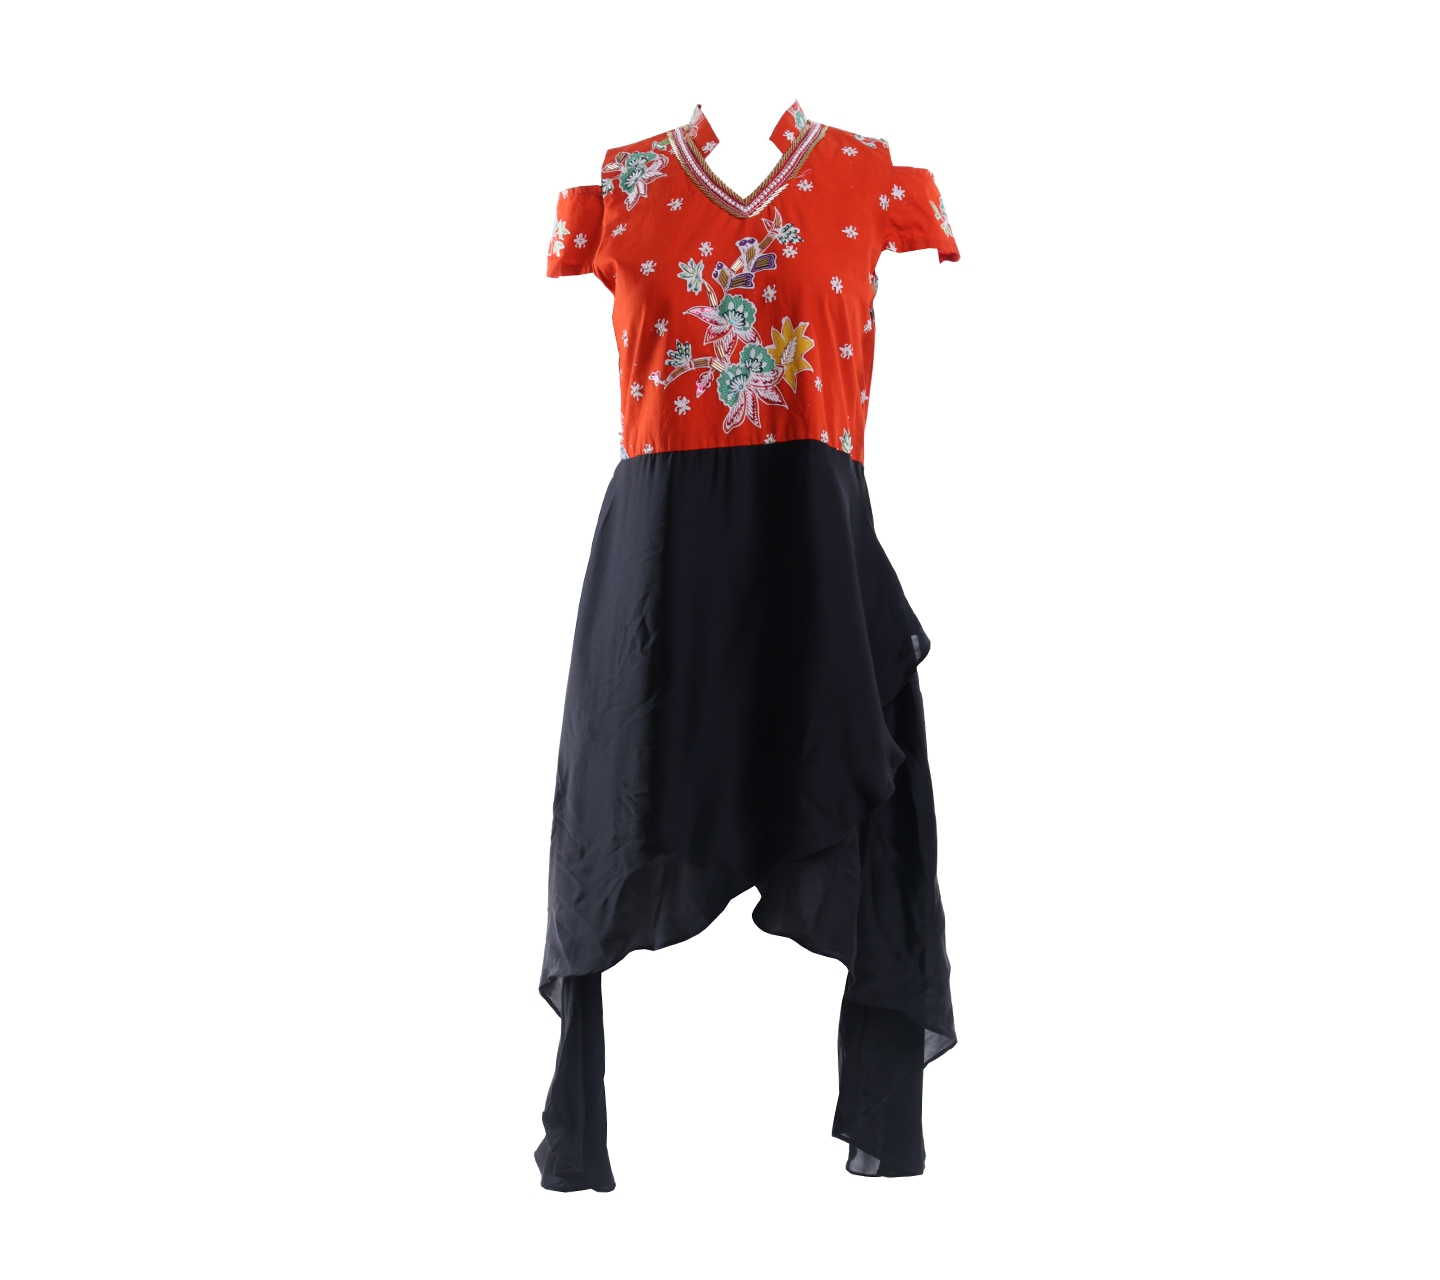 Kencana Pajajaran Orange And Black Floral Beads Mini Dress